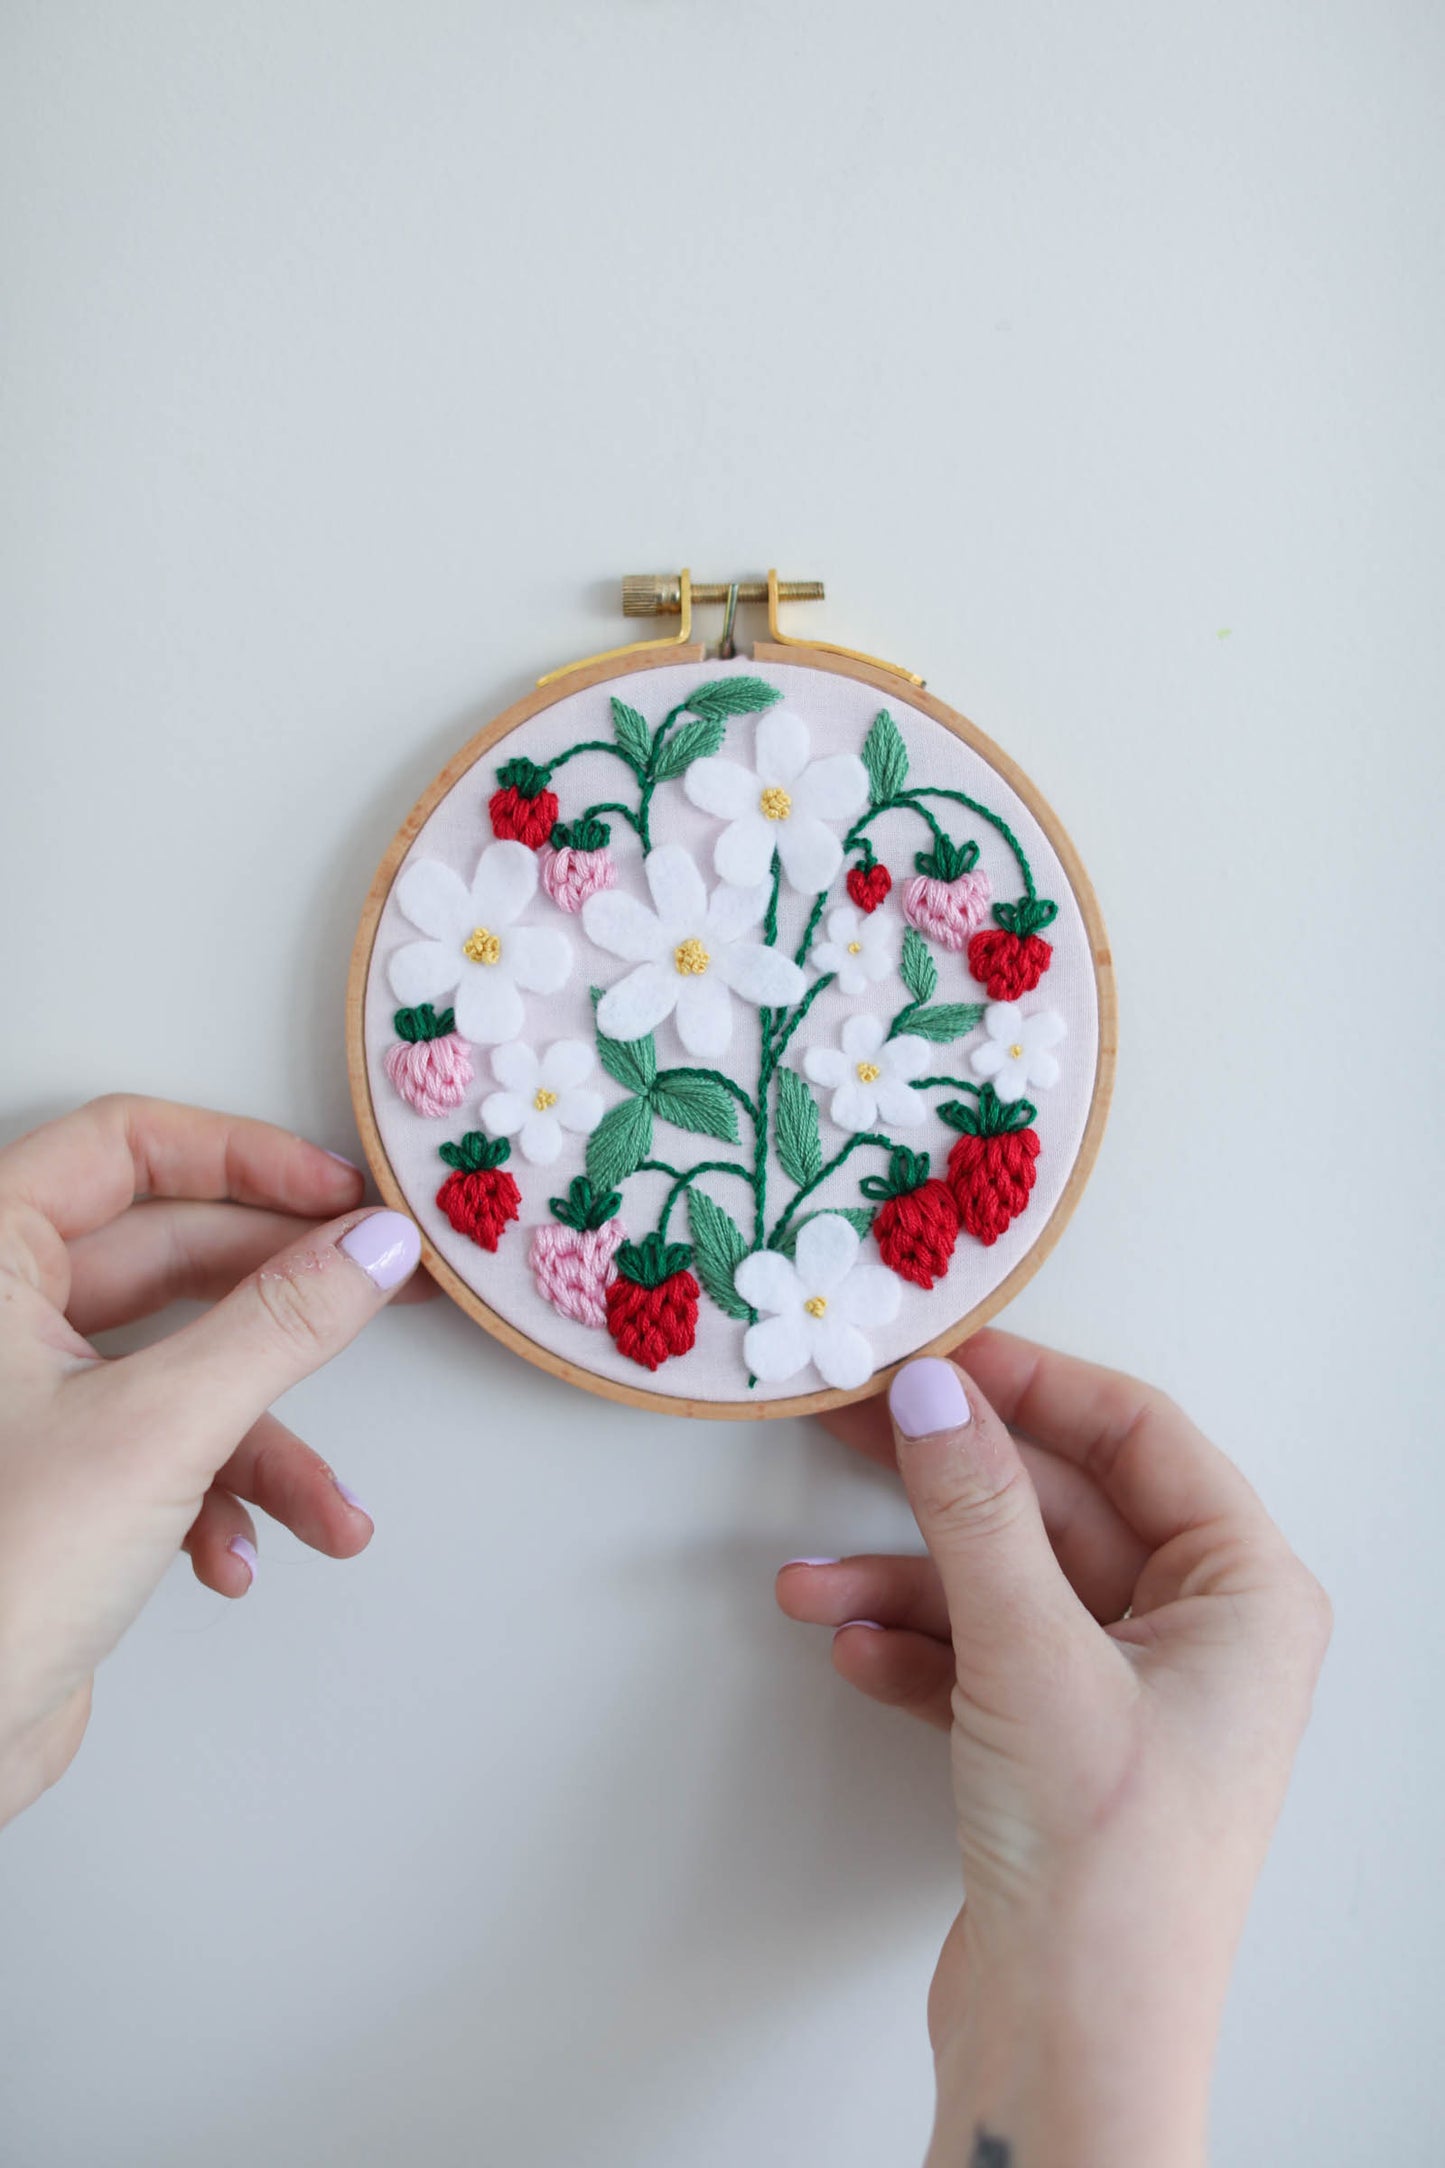 5" Strawberry Patch Embroidery Kit - Intermediate